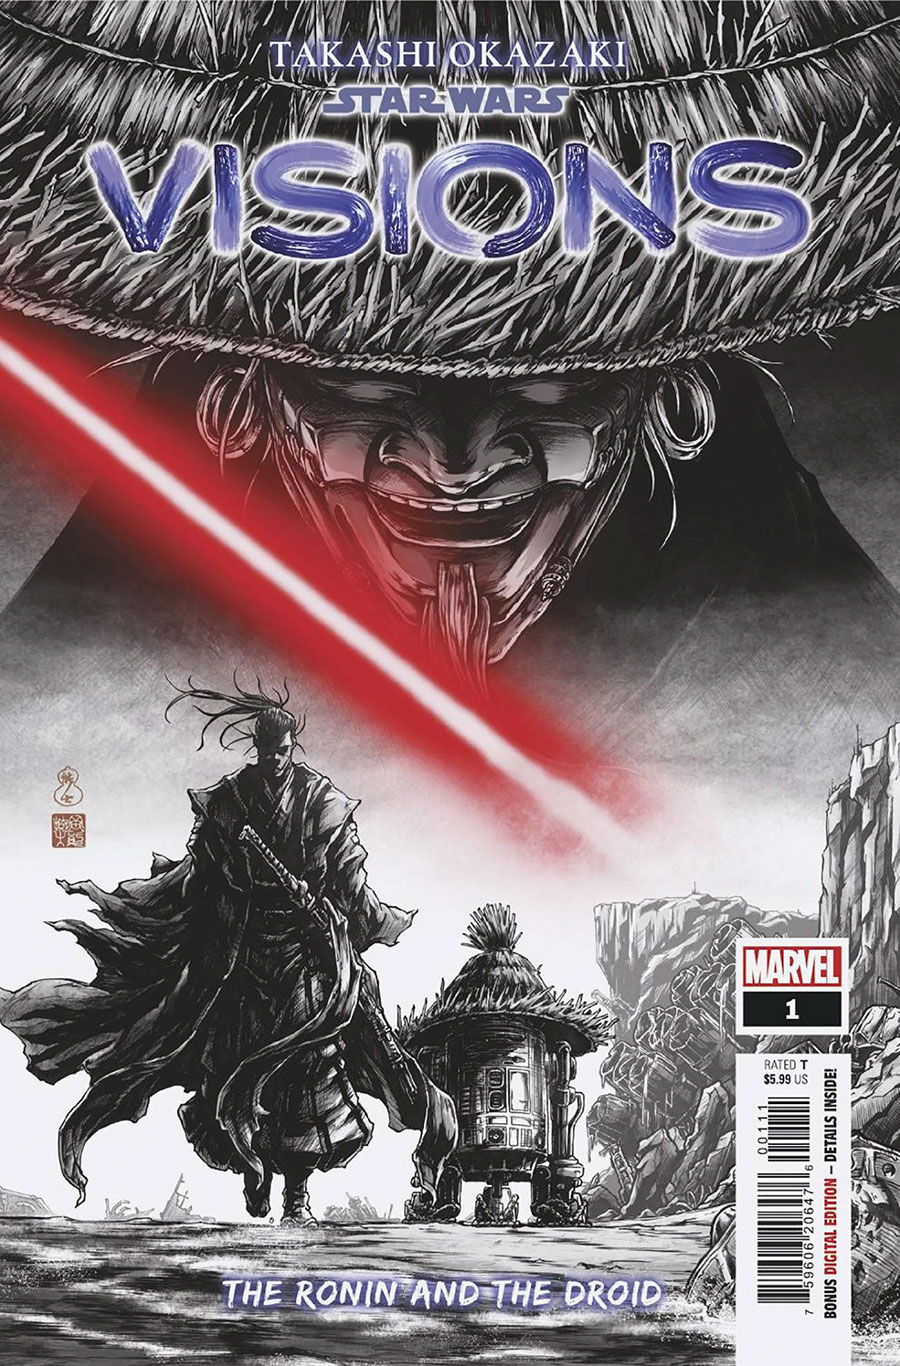 Star Wars Visions Takashi Okazaki #1 (One Shot) Cover A Regular Takashi Okazaki Cover